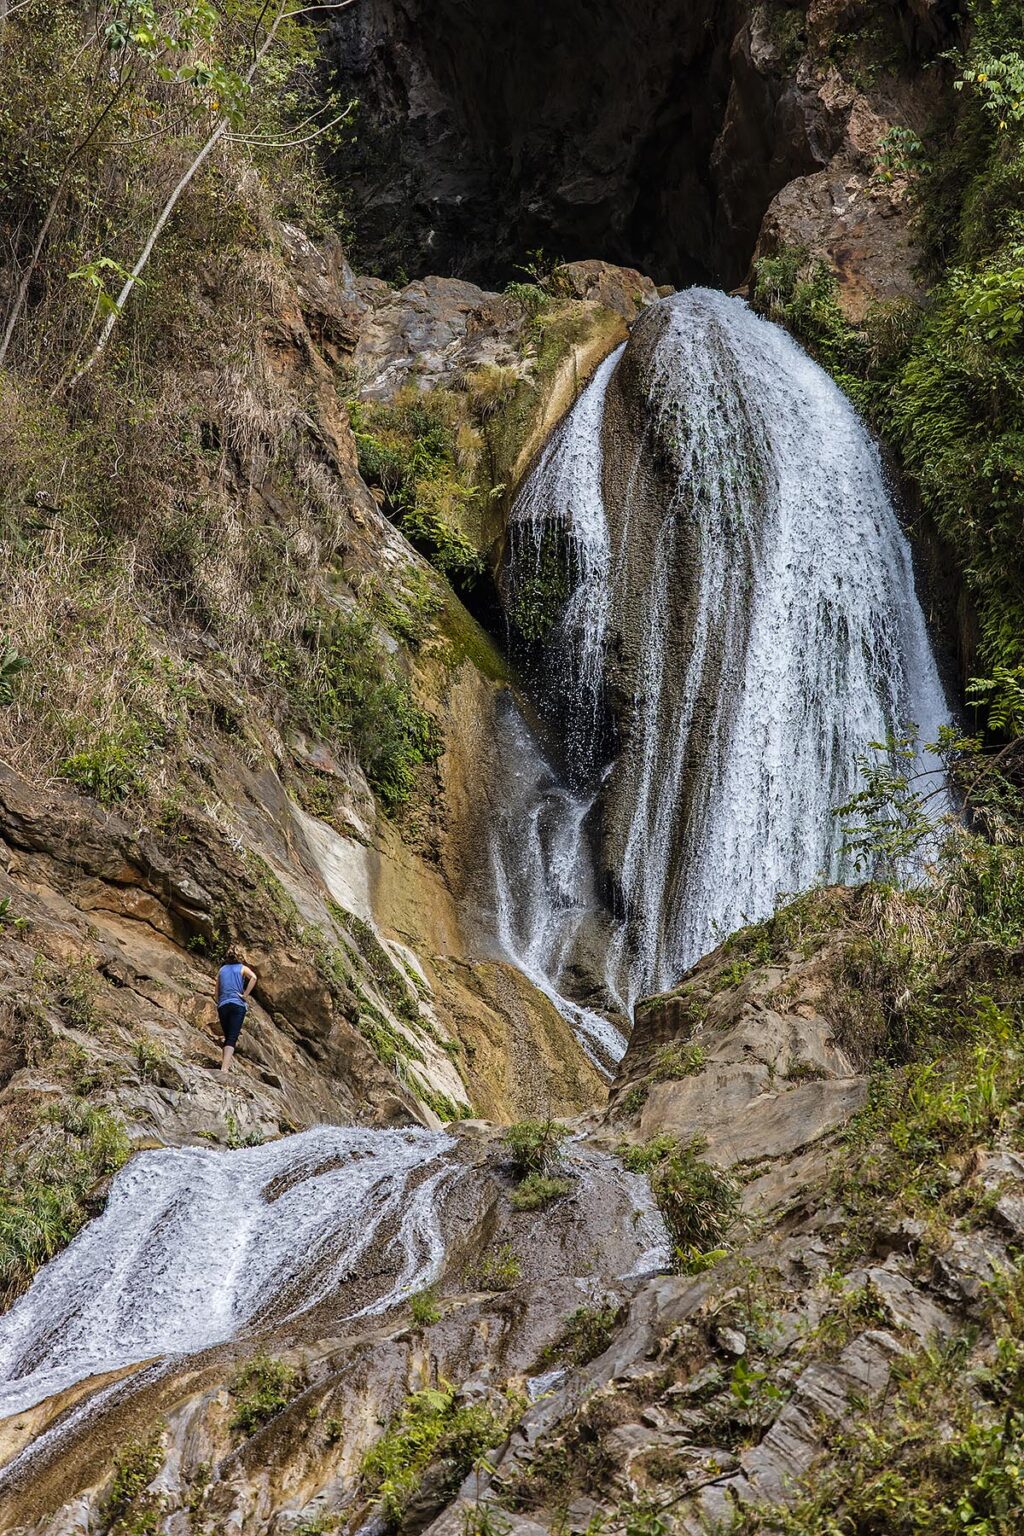 The 62 meter waterfall at SALTO DE CABURNI located in the TOPES DE COLLANTES in the mountains of SIERRA DEL ESCAMBRAY - CUBA